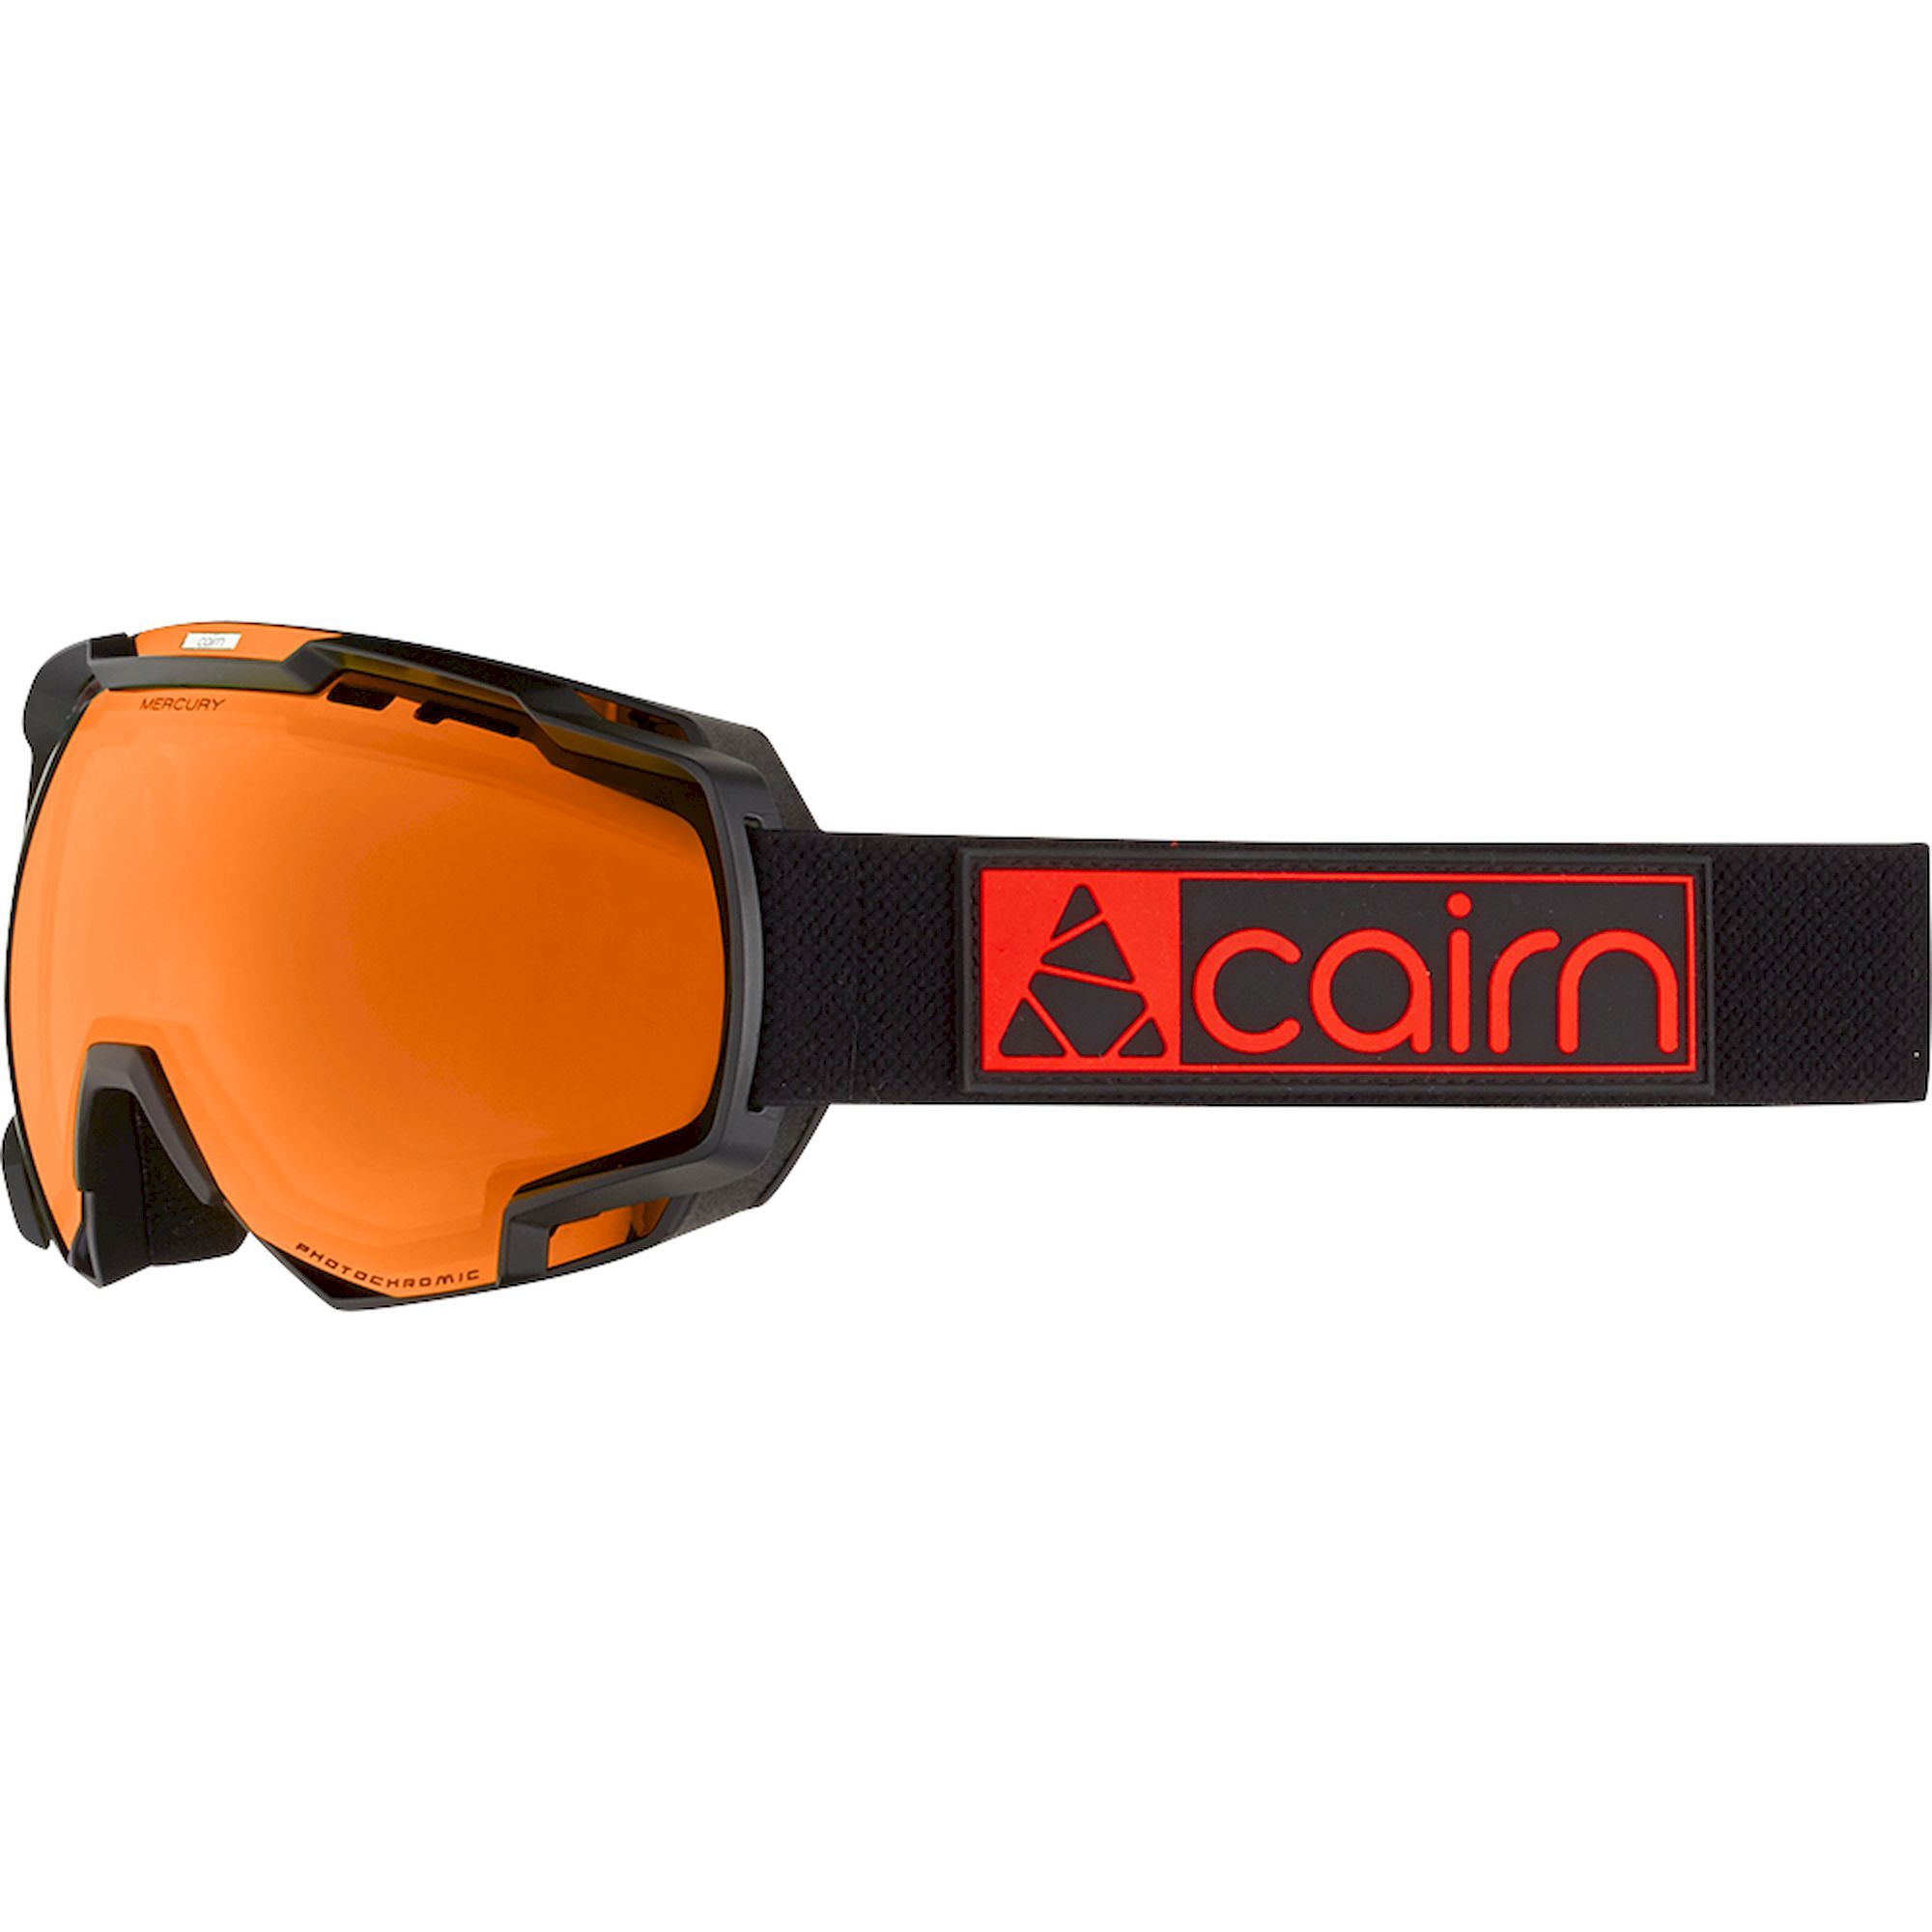 Cairn Mercury Pro - Ski goggles